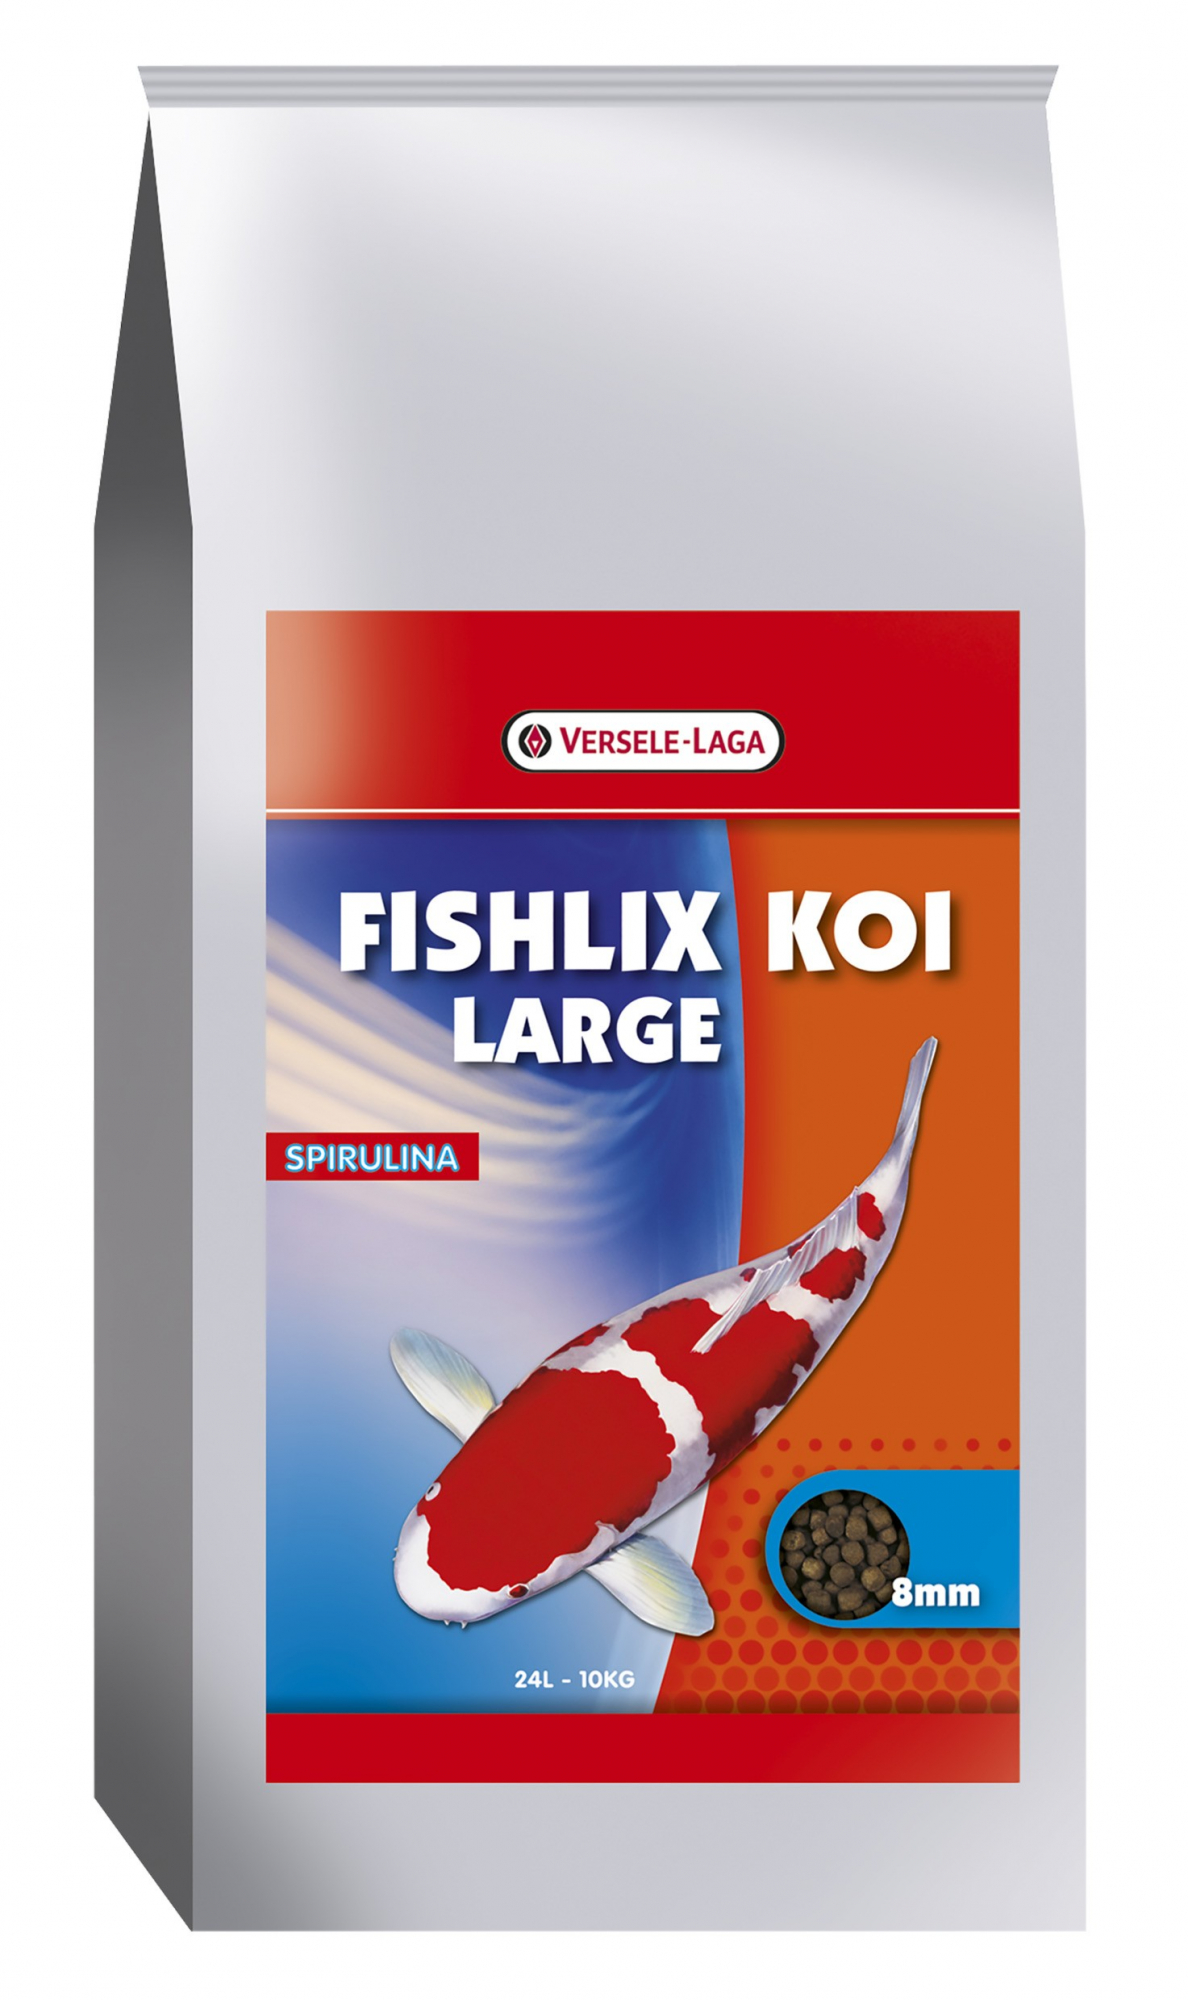 Fishlix Koi Large 8 mm drijvend voer voor kois